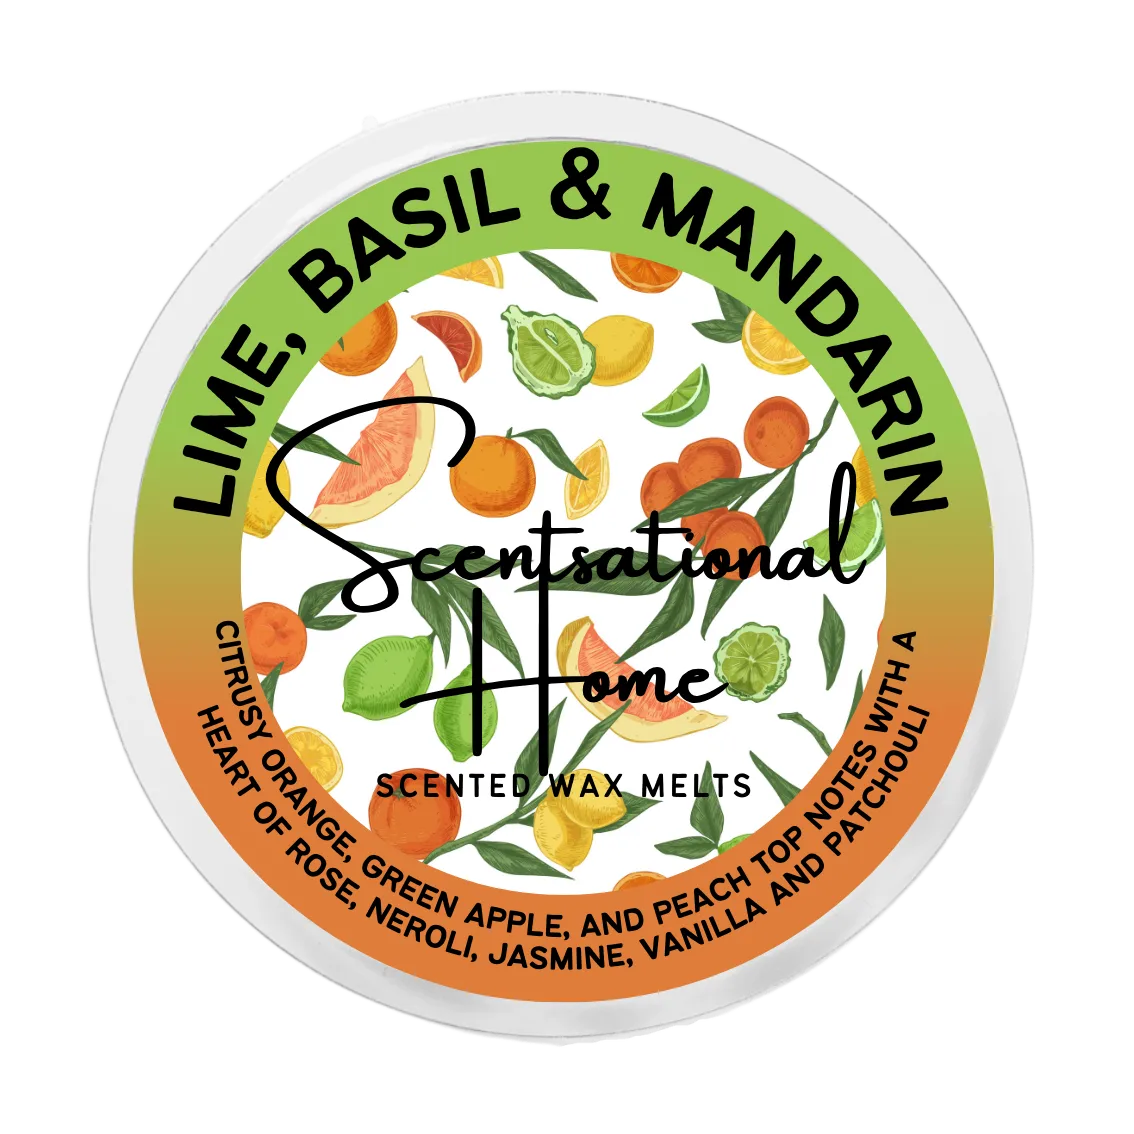 Lime, Basil & Mandarin Wax Melt